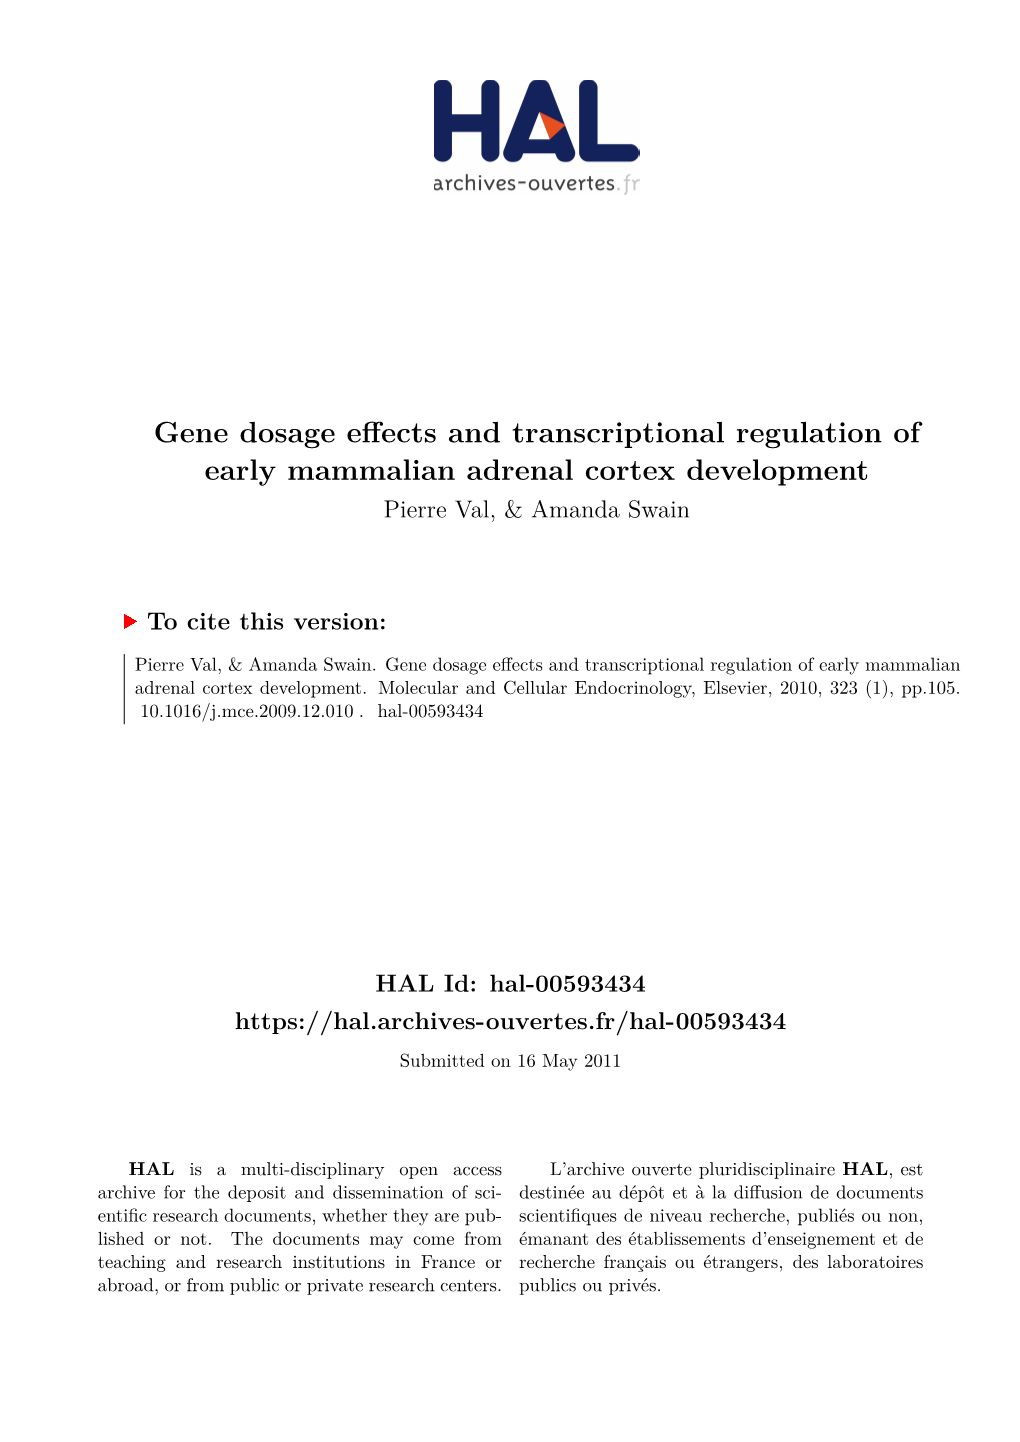 Gene Dosage Effects and Transcriptional Regulation of Early Mammalian Adrenal Cortex Development Pierre Val, & Amanda Swain